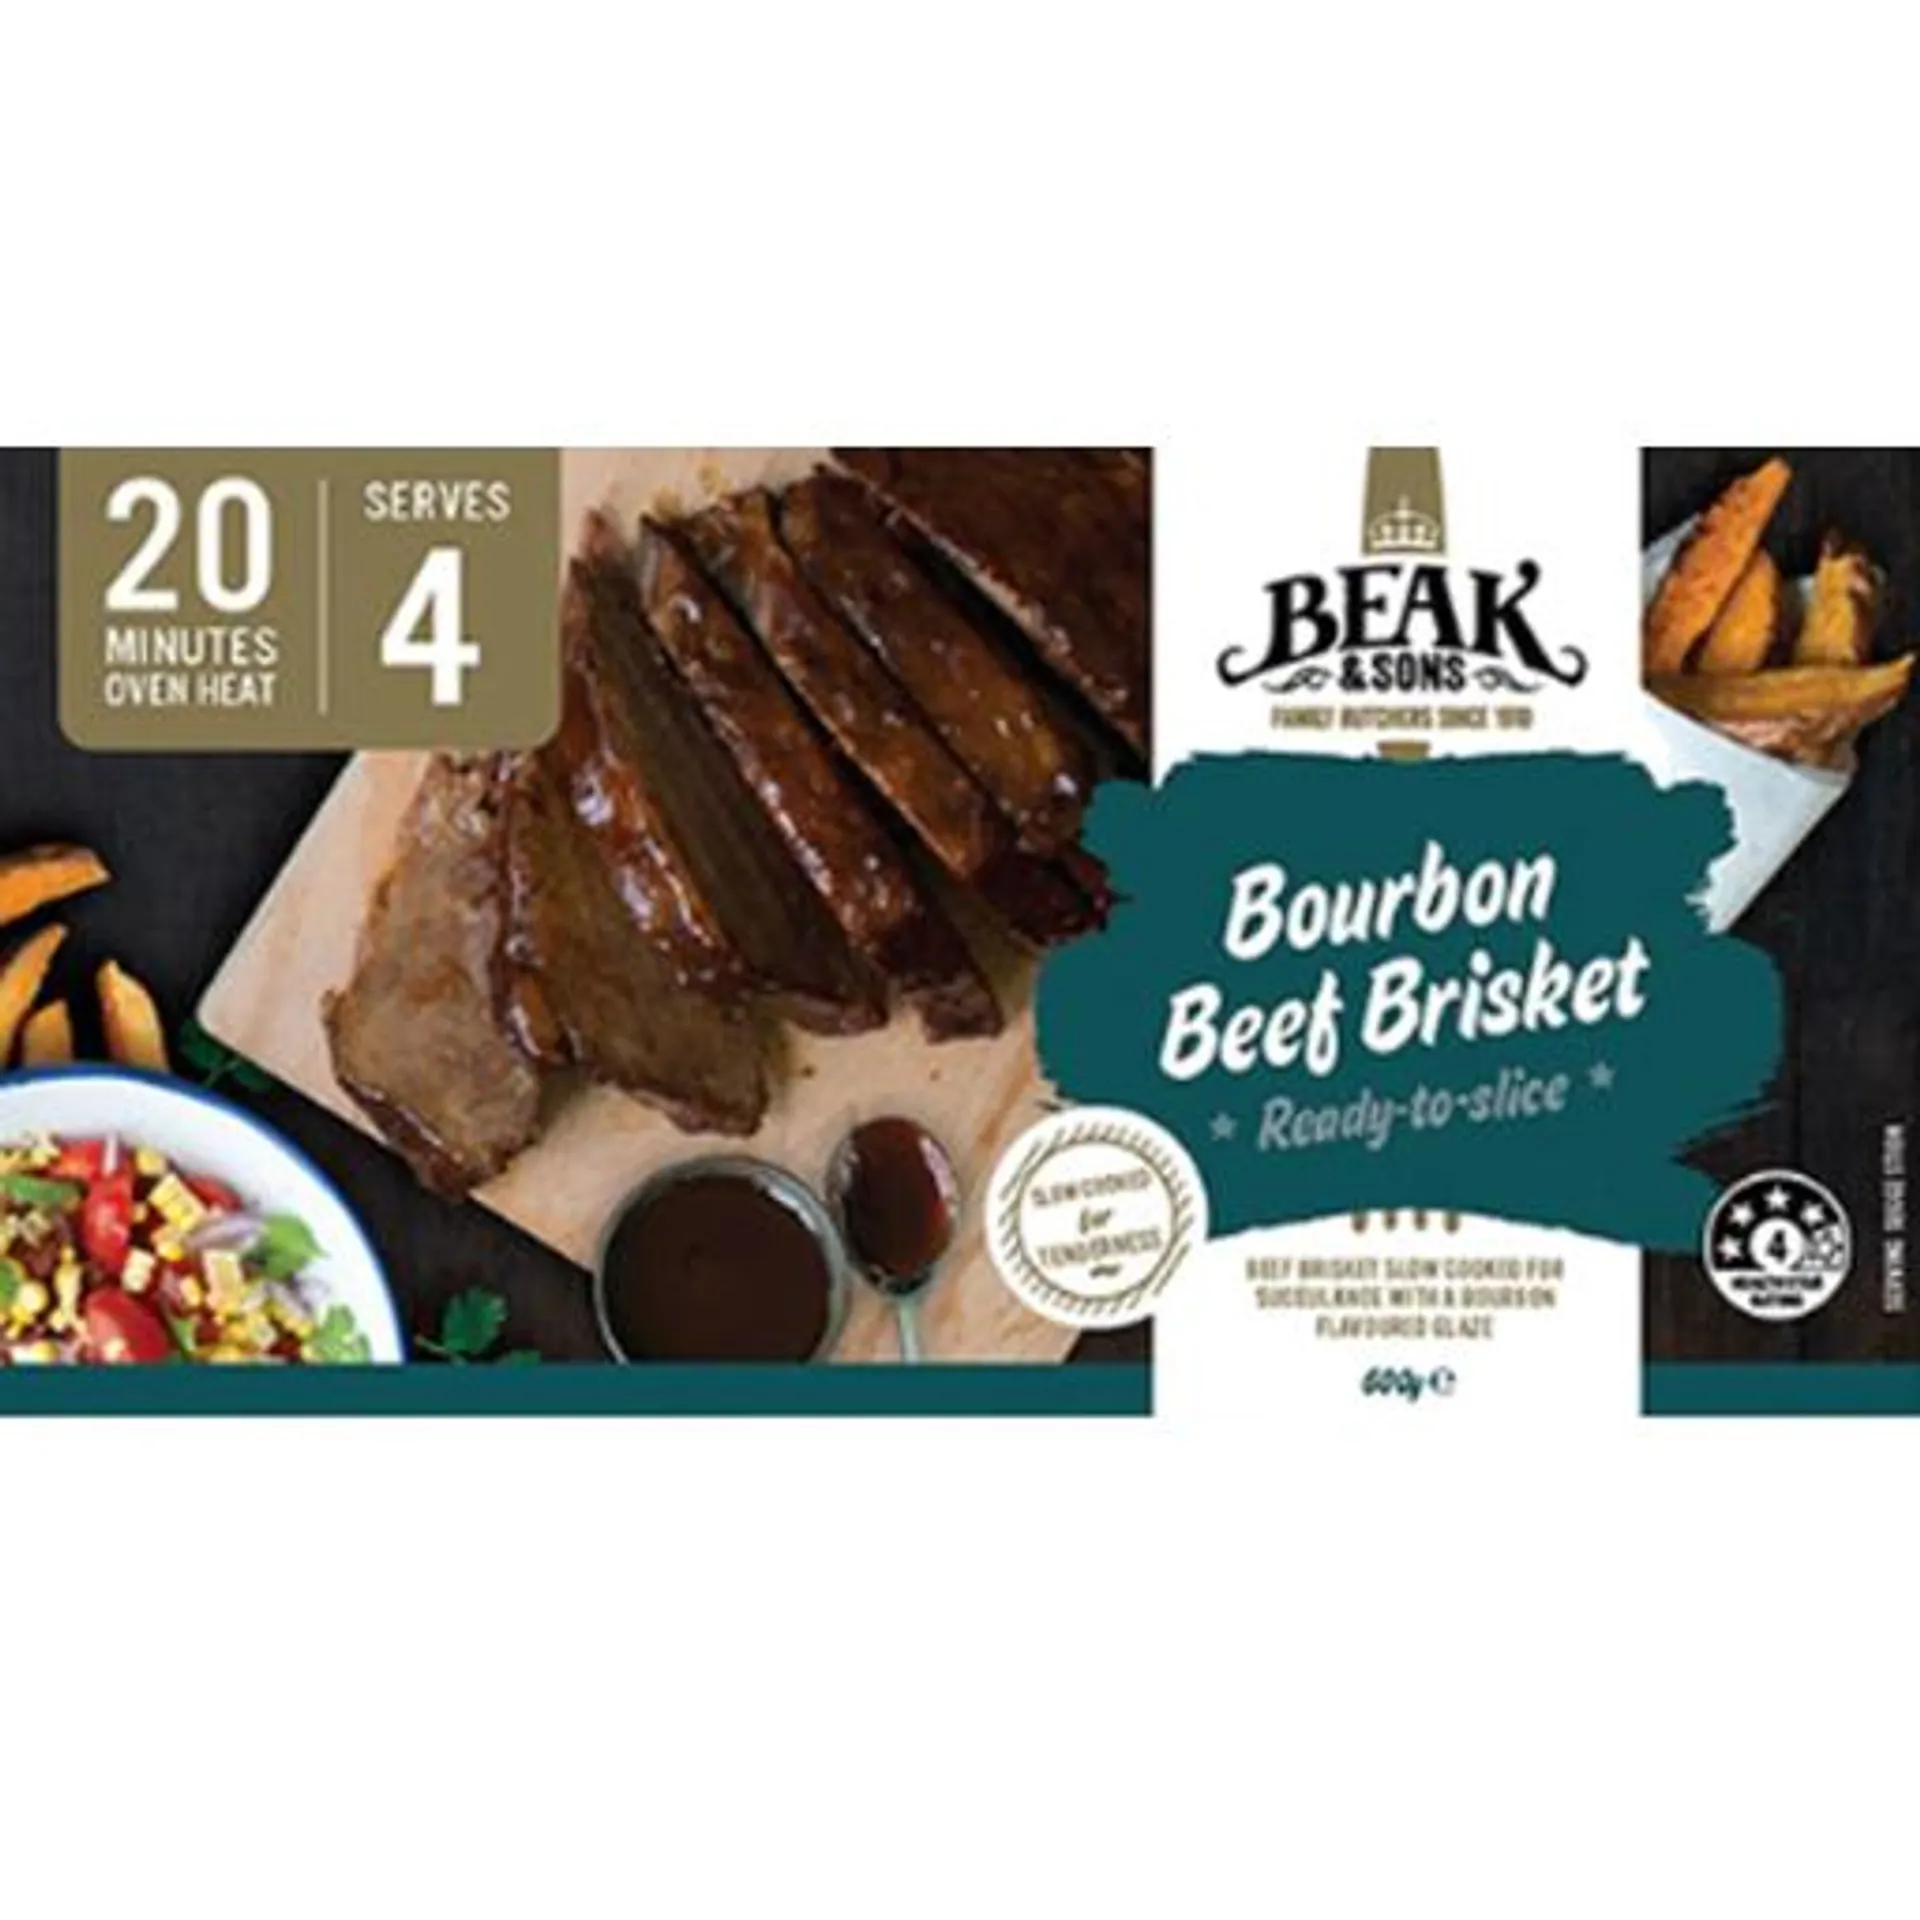 Beak & Sons Bourbon Beef Brisket 600g